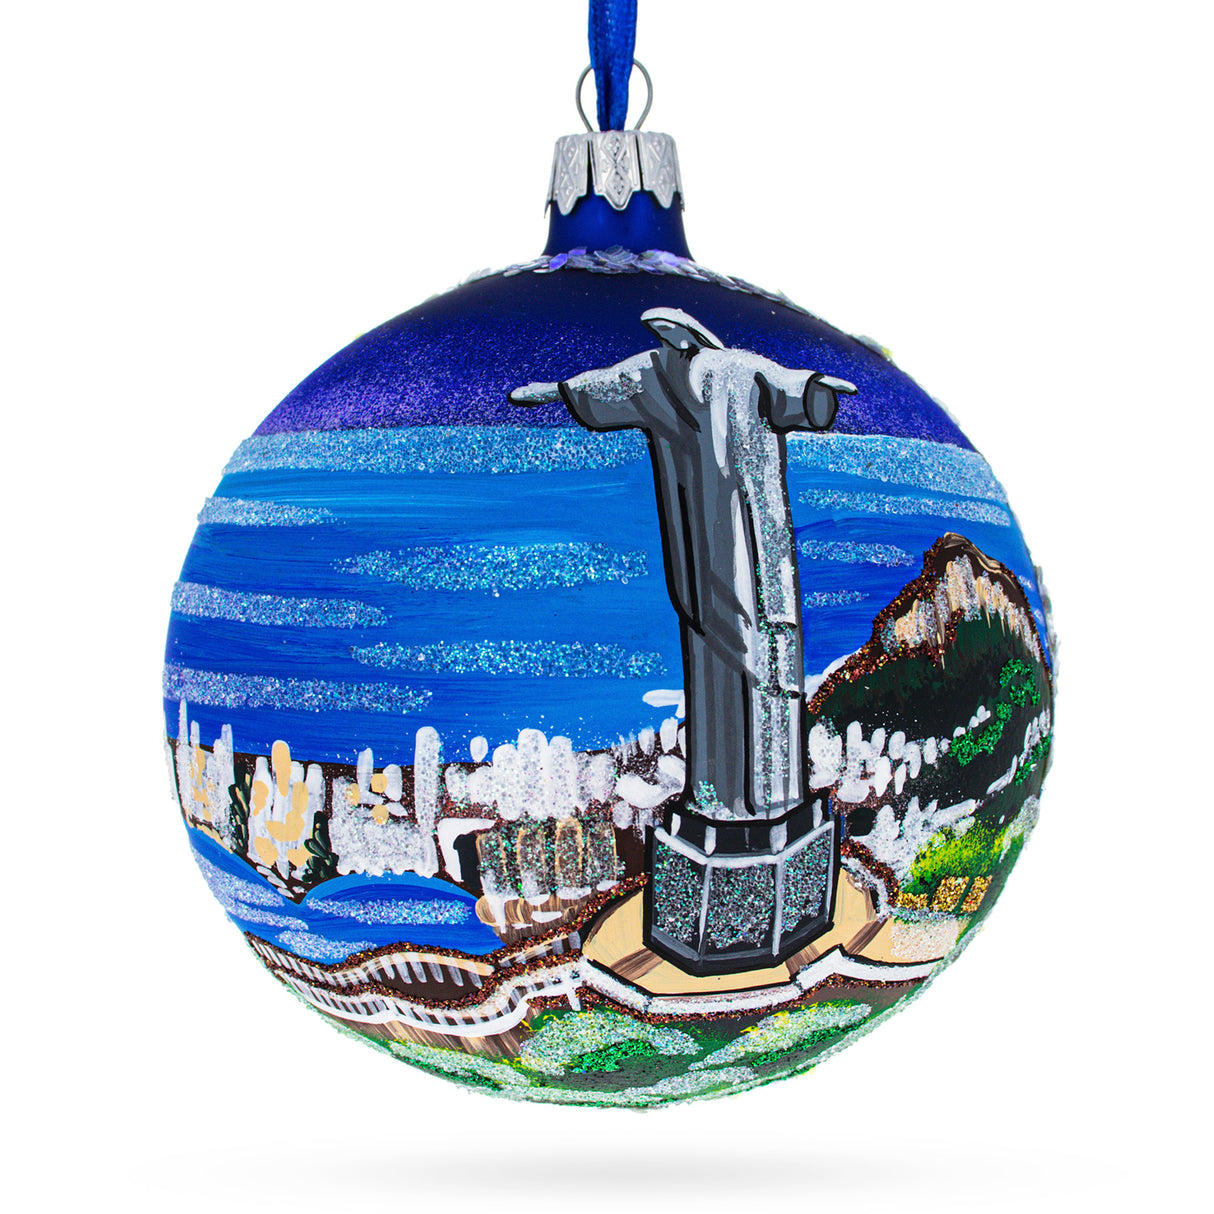 Corcovado - Christ the Redeemer, Rio de Janeiro, Brazil Glass Christmas Ornament 4 Inches in Multi color, Round shape